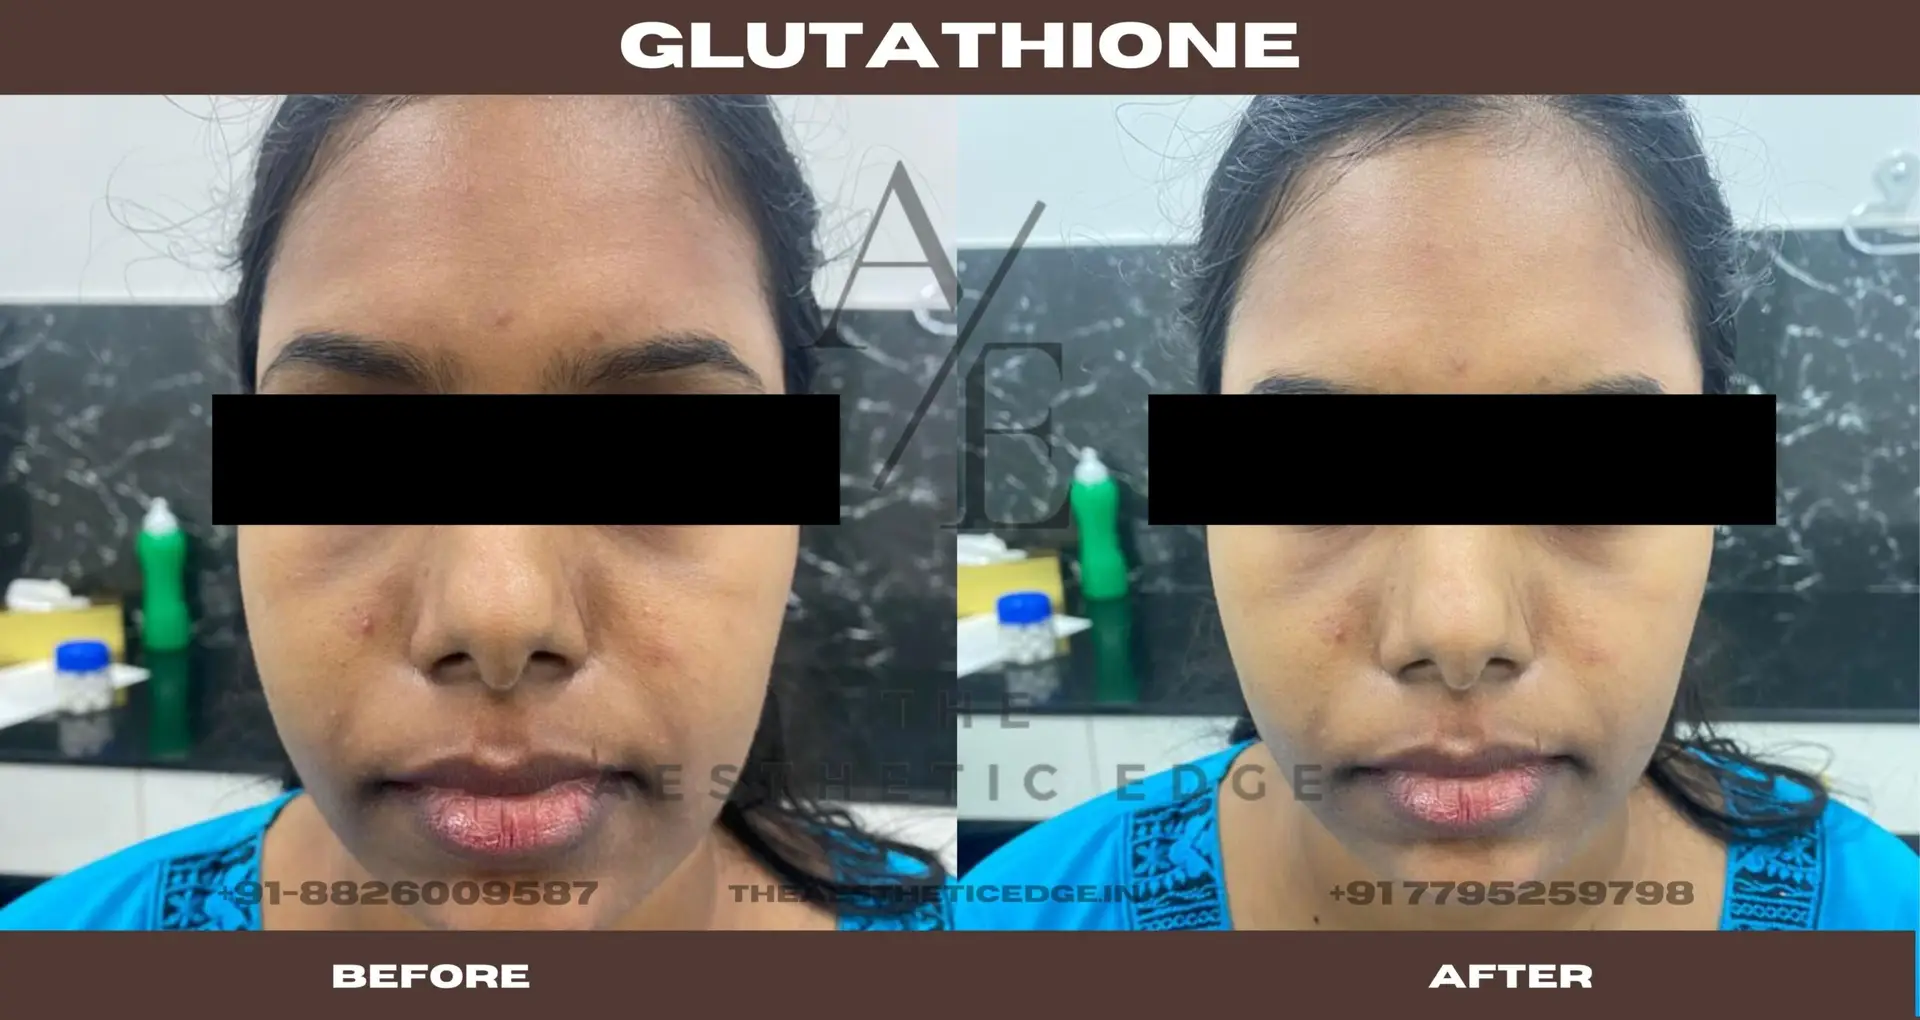 Glutathione results